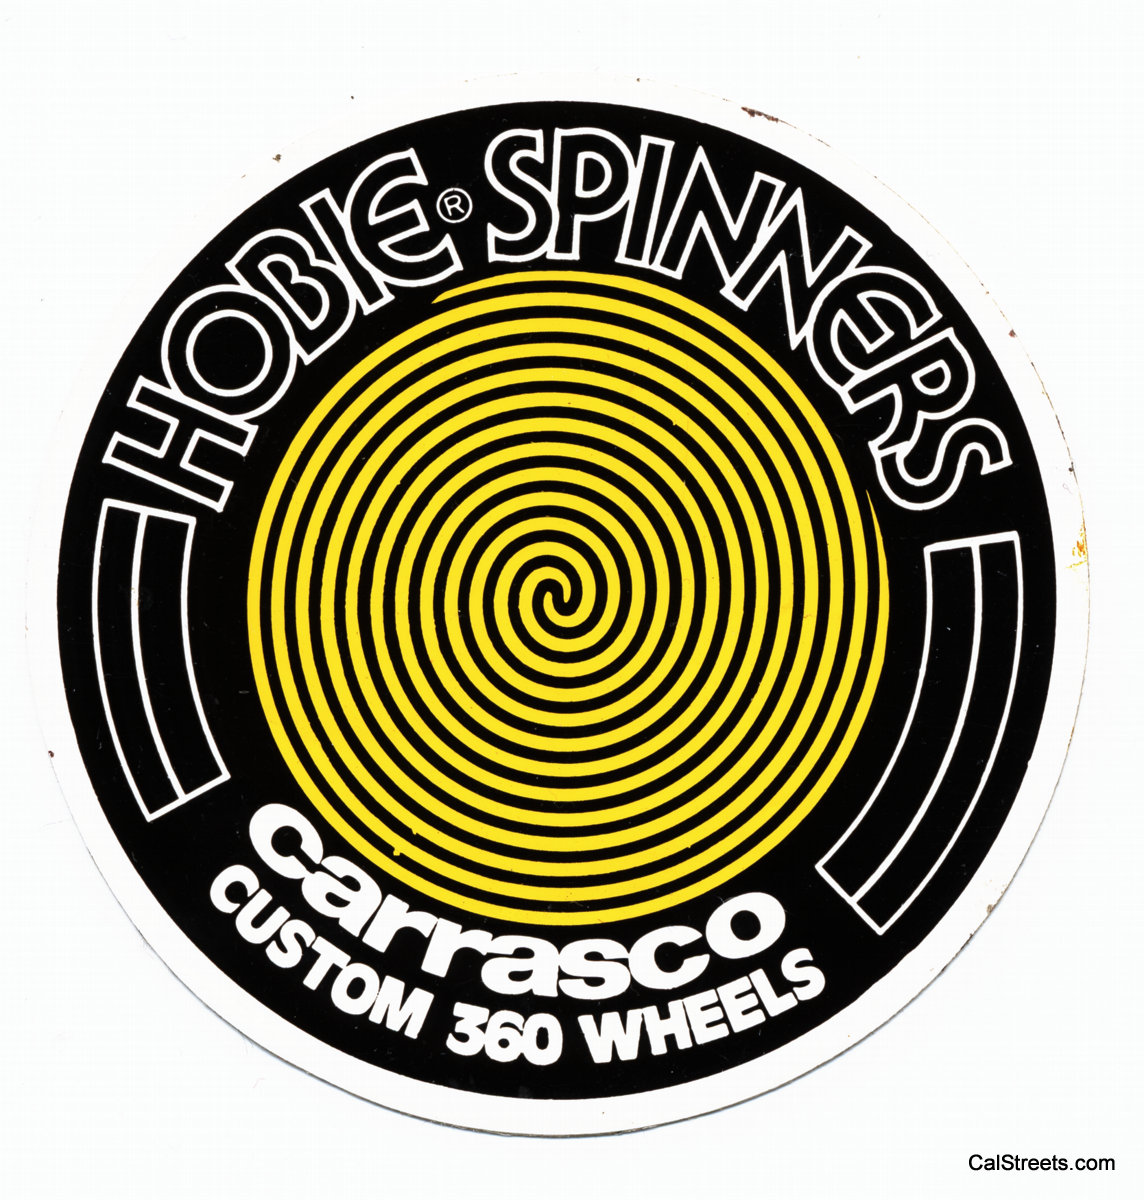 Hobie-Spinners-Carrasco-Custom-360-Wheels.jpg